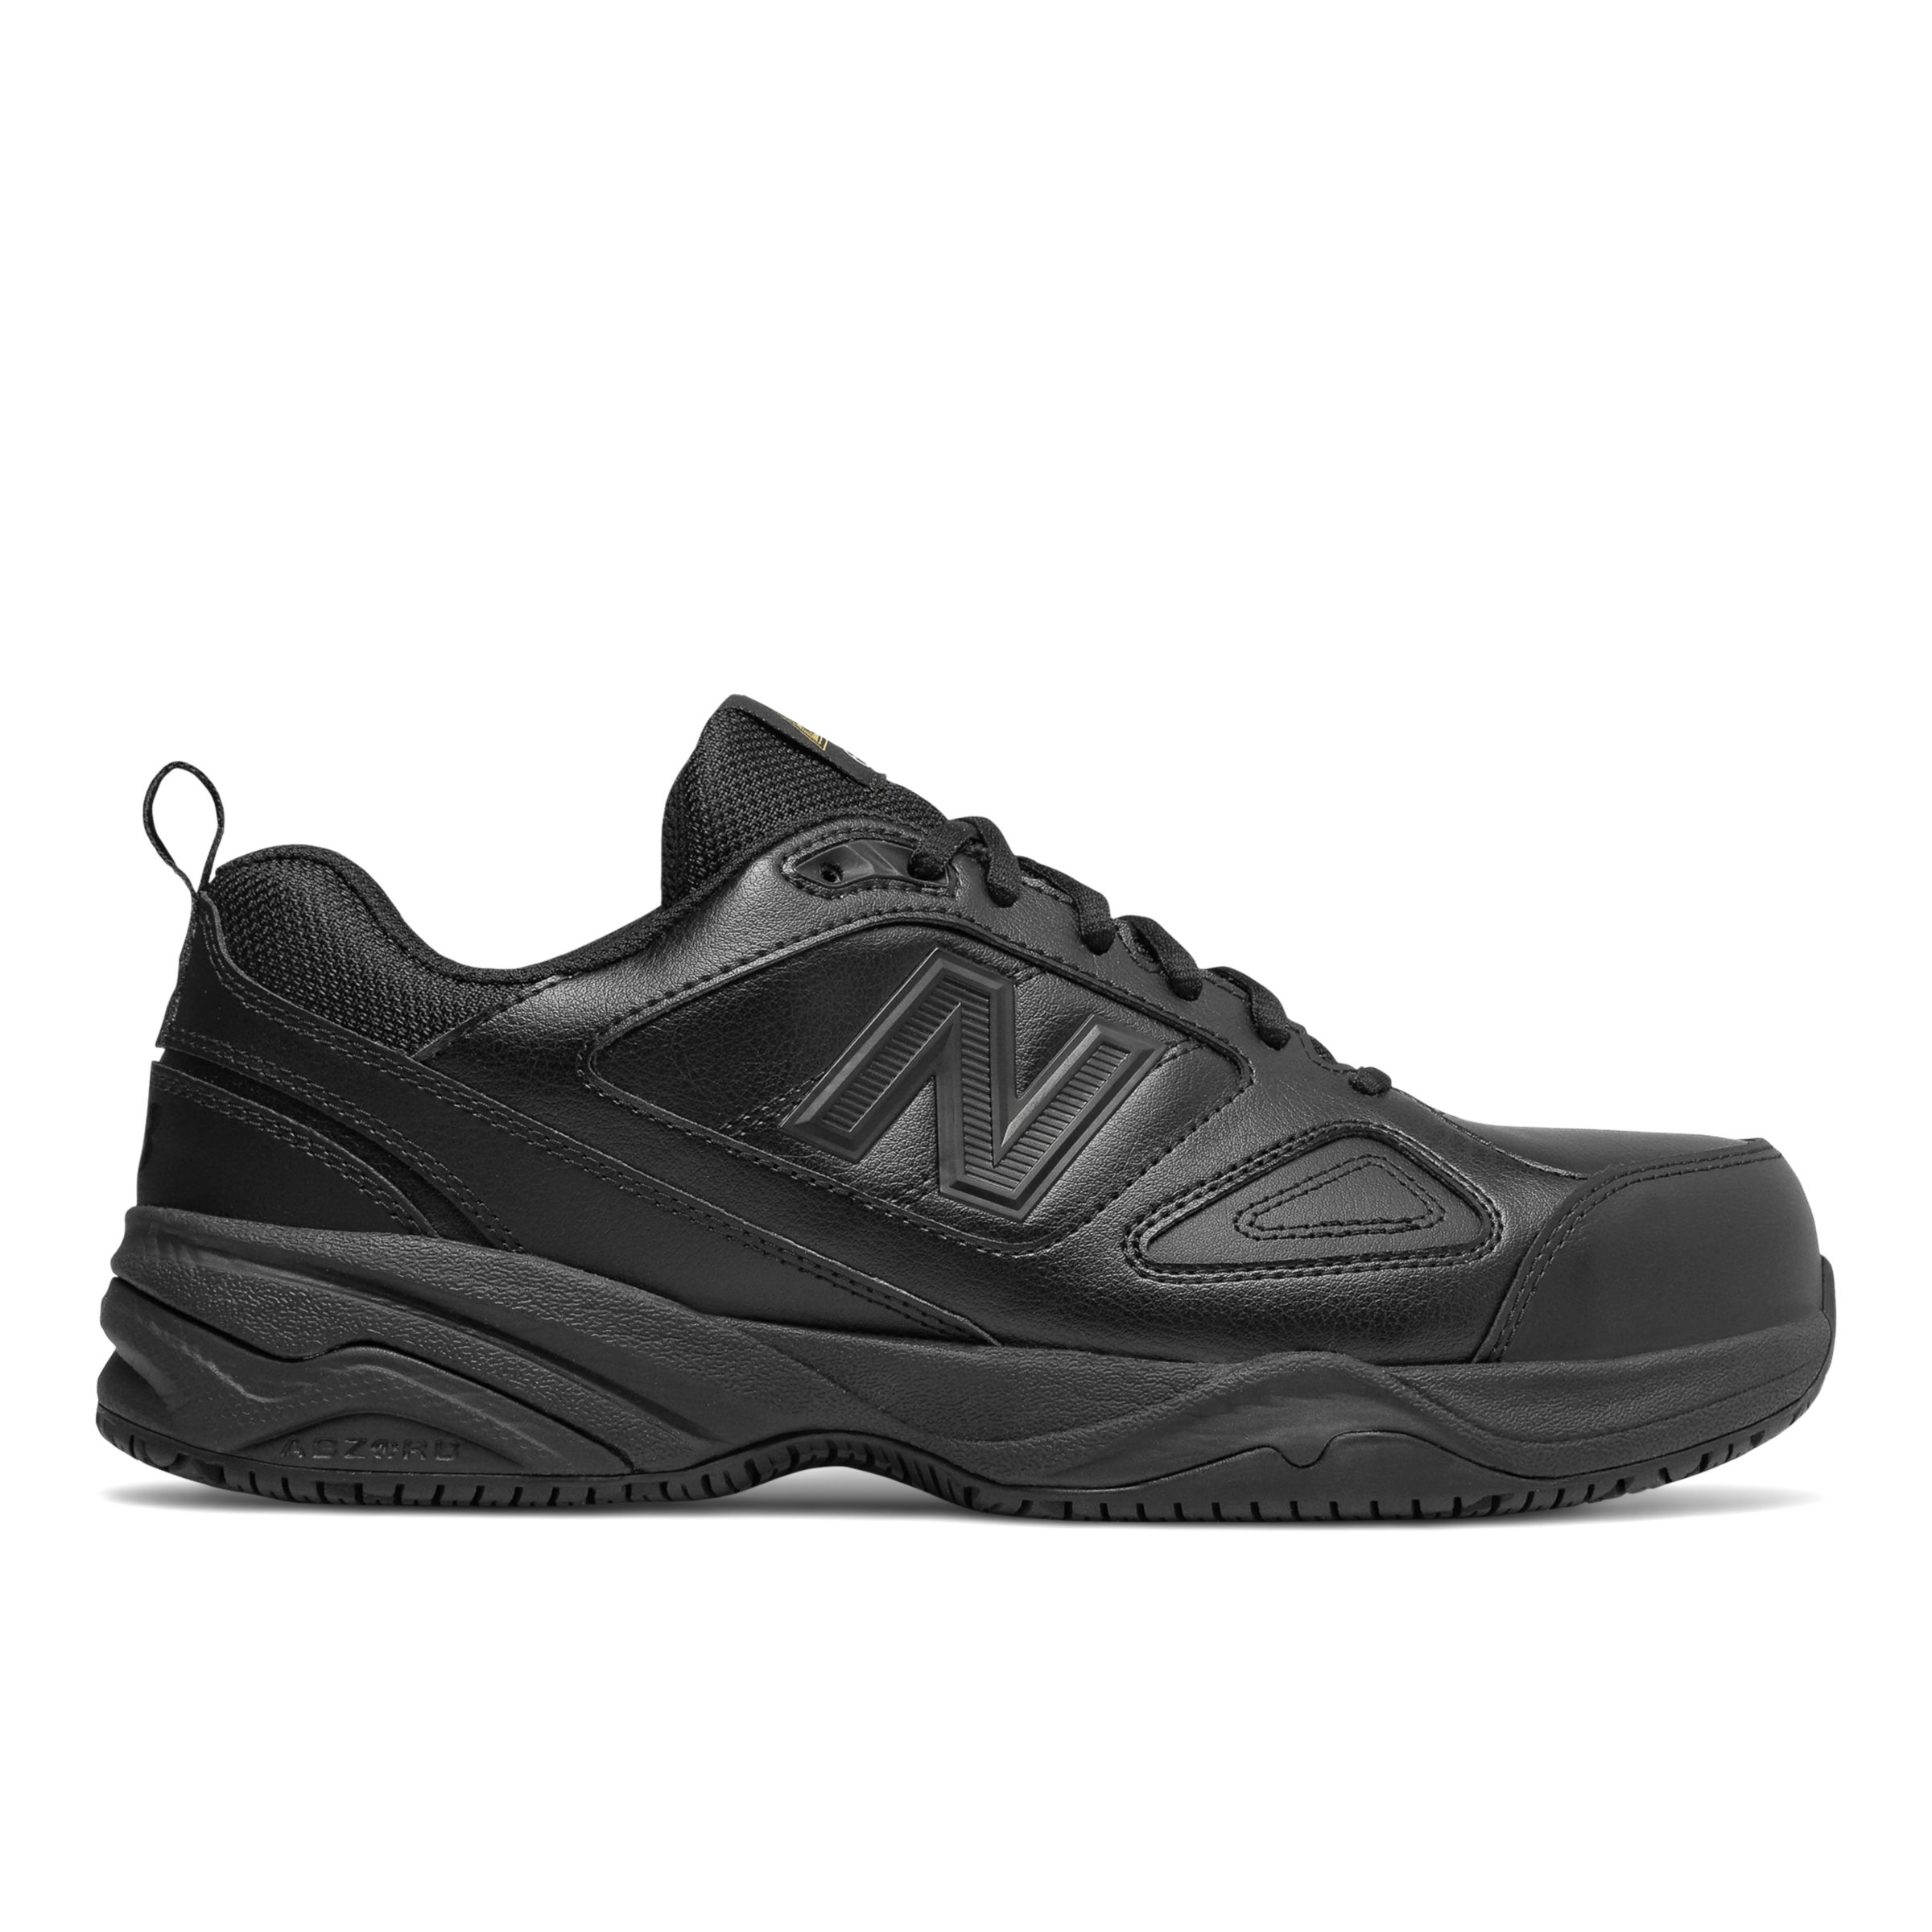 black leather work sneakers